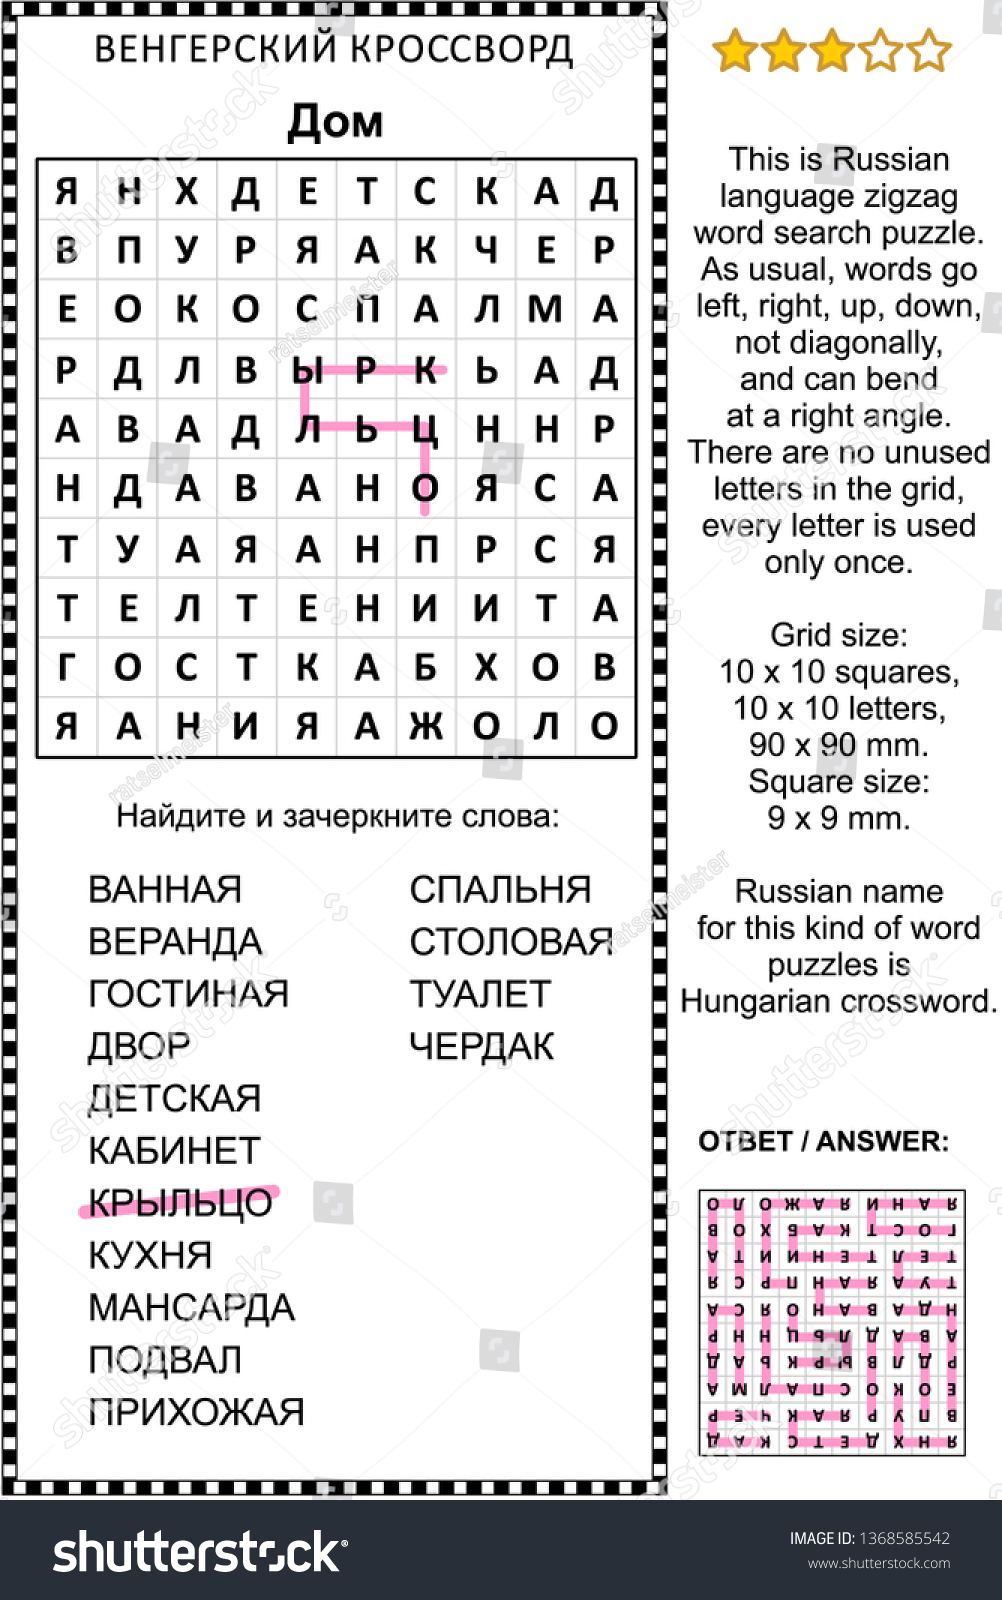 SVG of House word search puzzle in Russian (BATHROOM, VERANDA, LIVING ROOM, YARD, NURSERY ROOM, CABINET, PORCH, KITCHEN, GARRET, BASEMENT, HALLWAY, BEDROOM, DINING ROOM, TOILET, ATTIC). svg